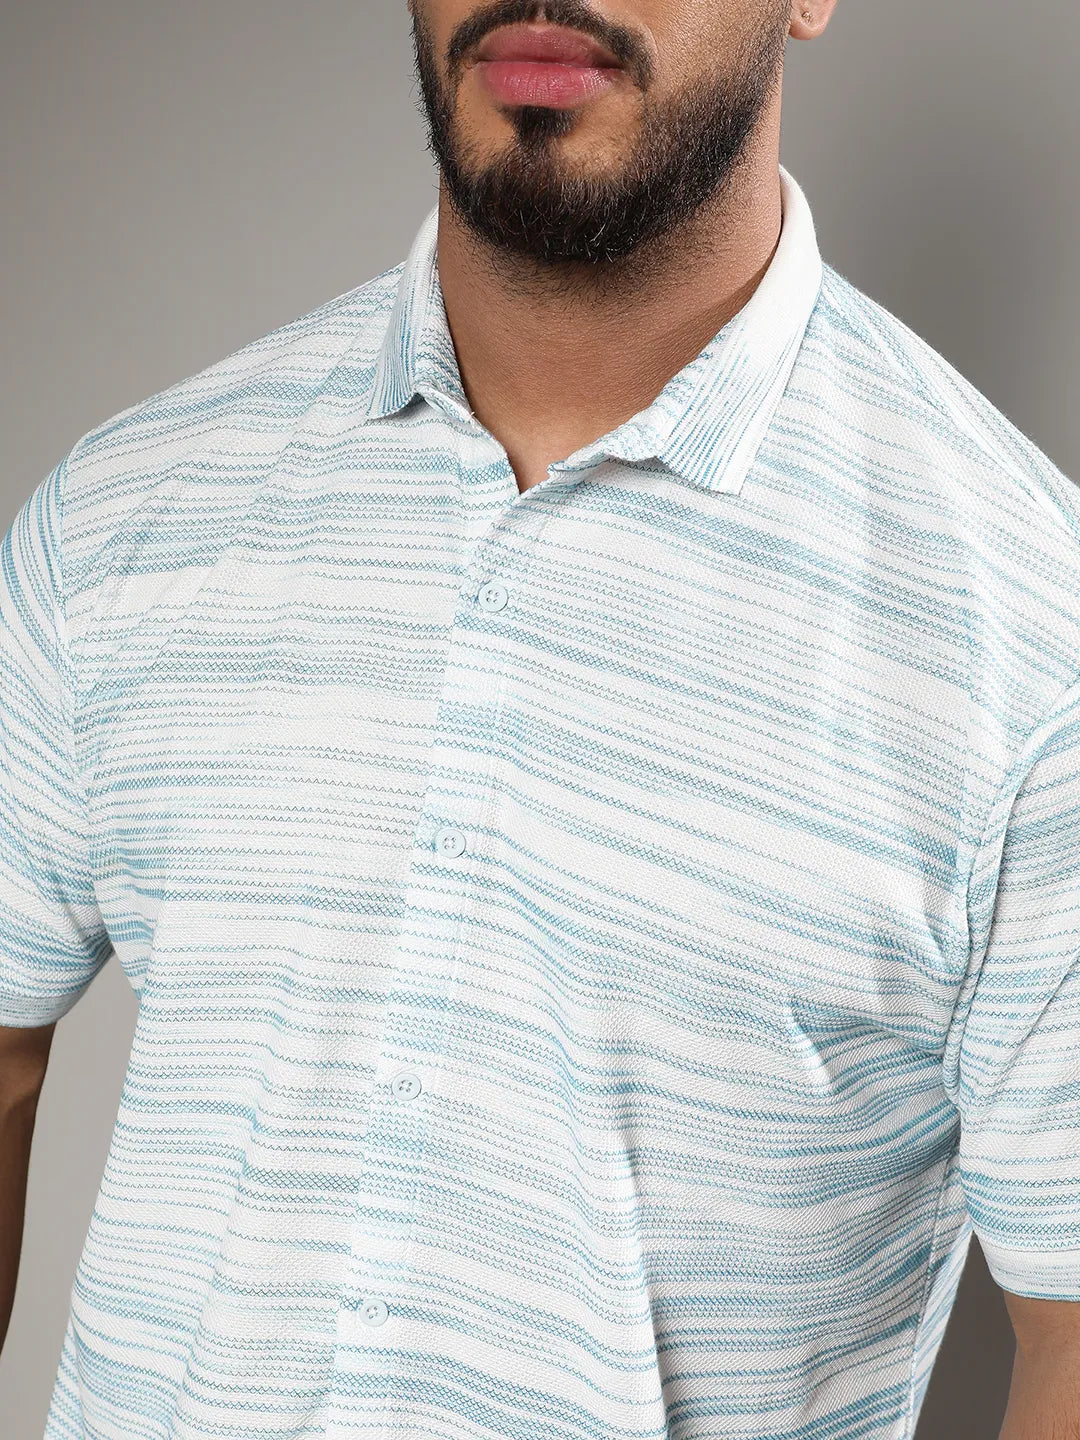 Light Blue & White Textured Horizontal Striped Shirt